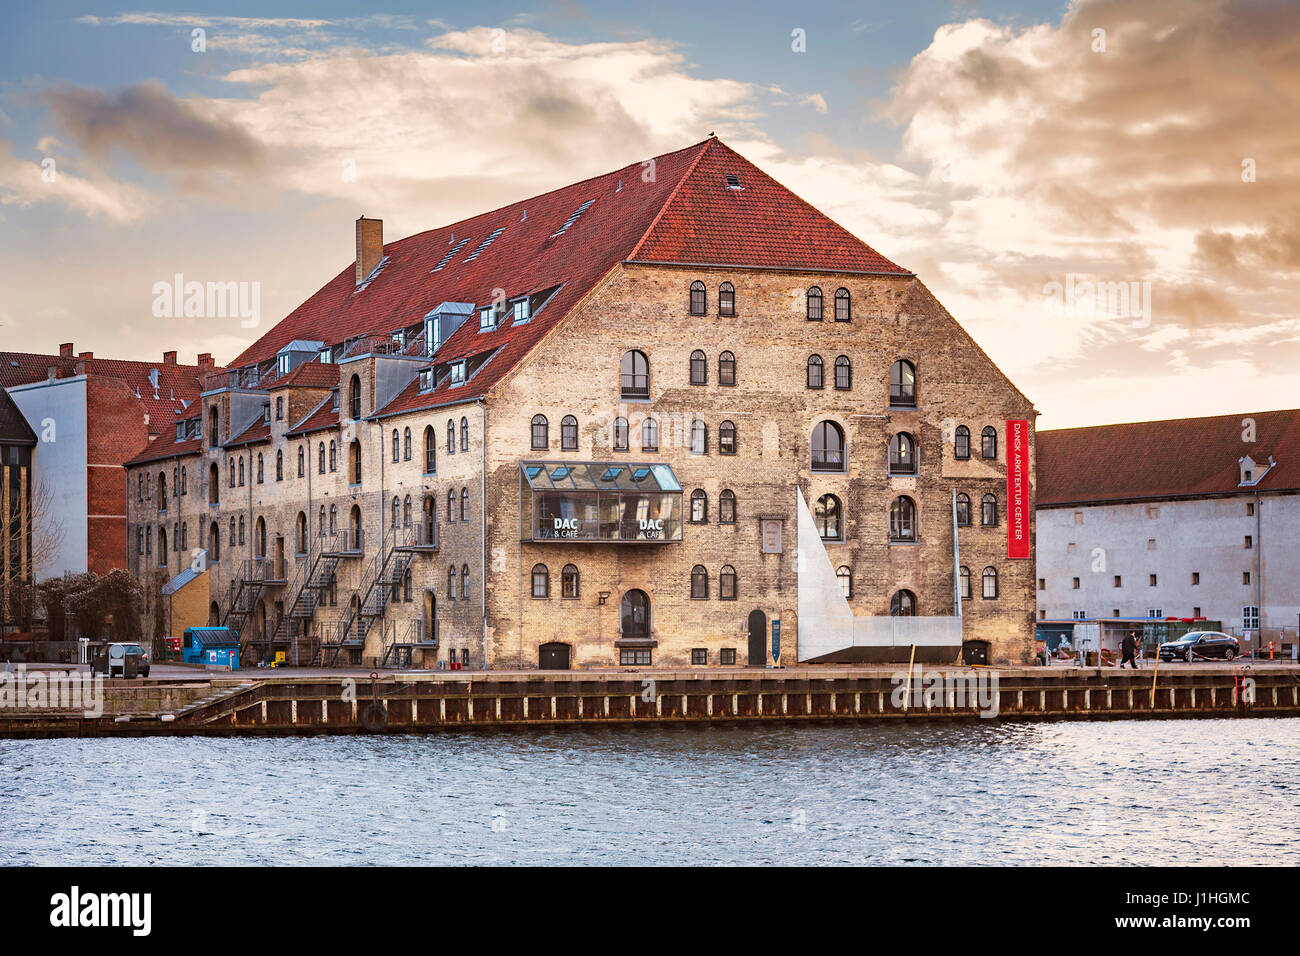 COPENHAGEN, DENMARK - DECEMBER 24, 2016. The Danish architecture center, which is housed in a restored shipyard warehouse. Stock Photo